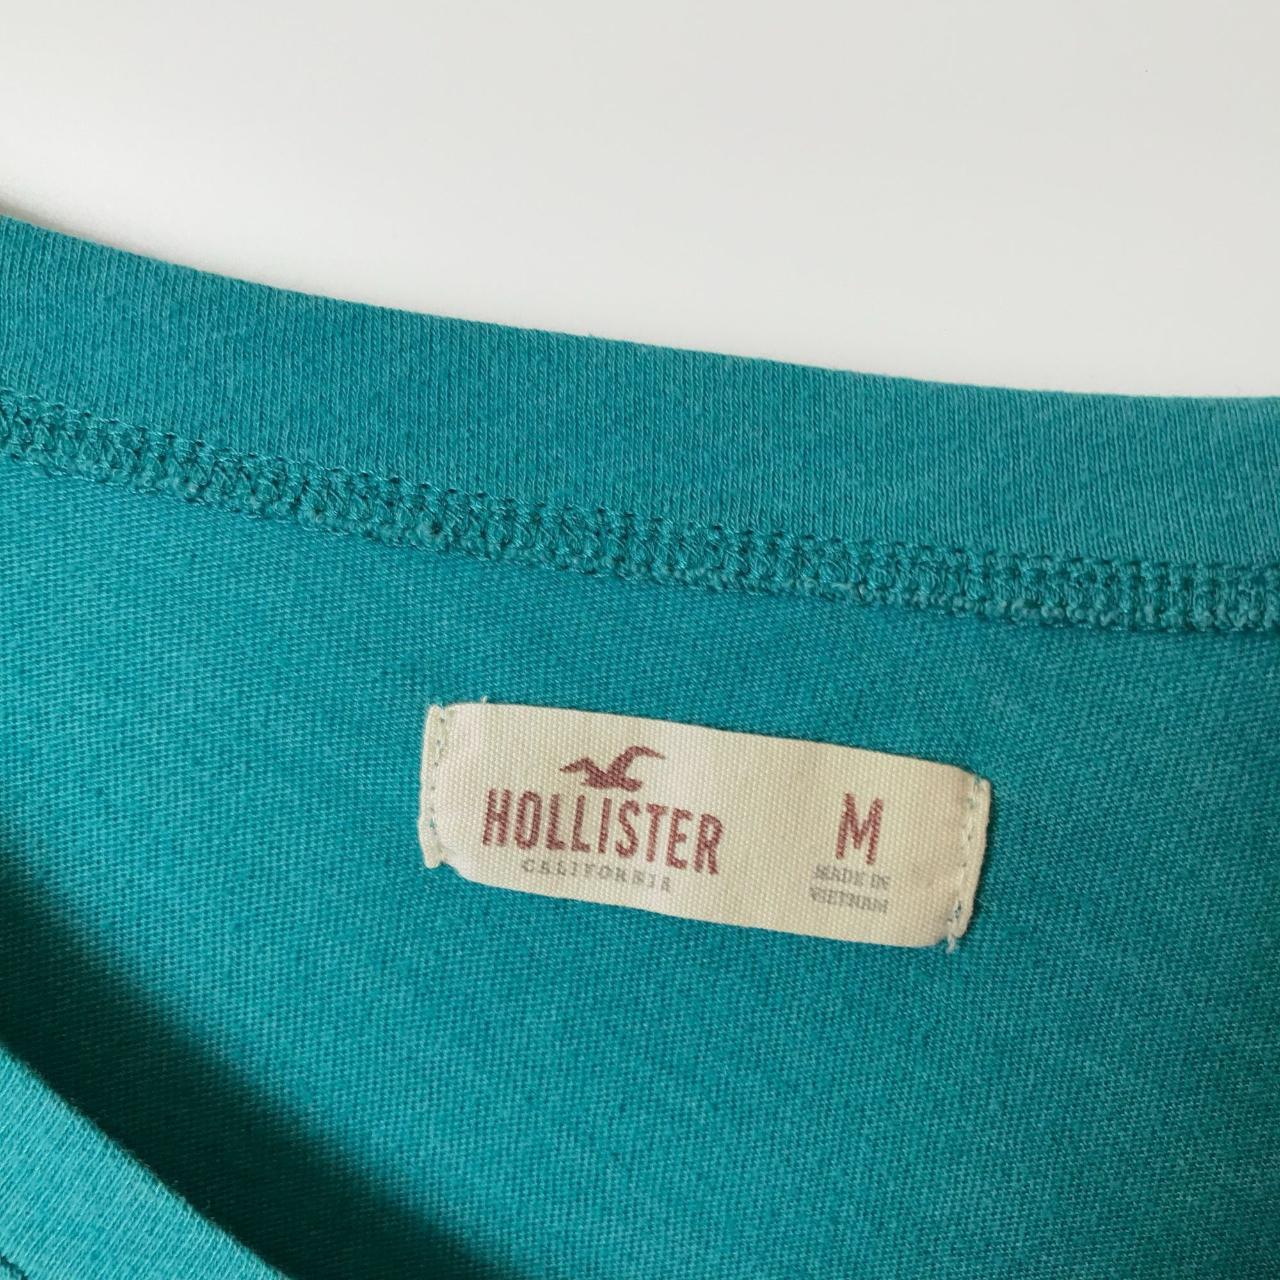 Hollister T Shirt Classic Trendy V-Neck Graphic Tee - Depop